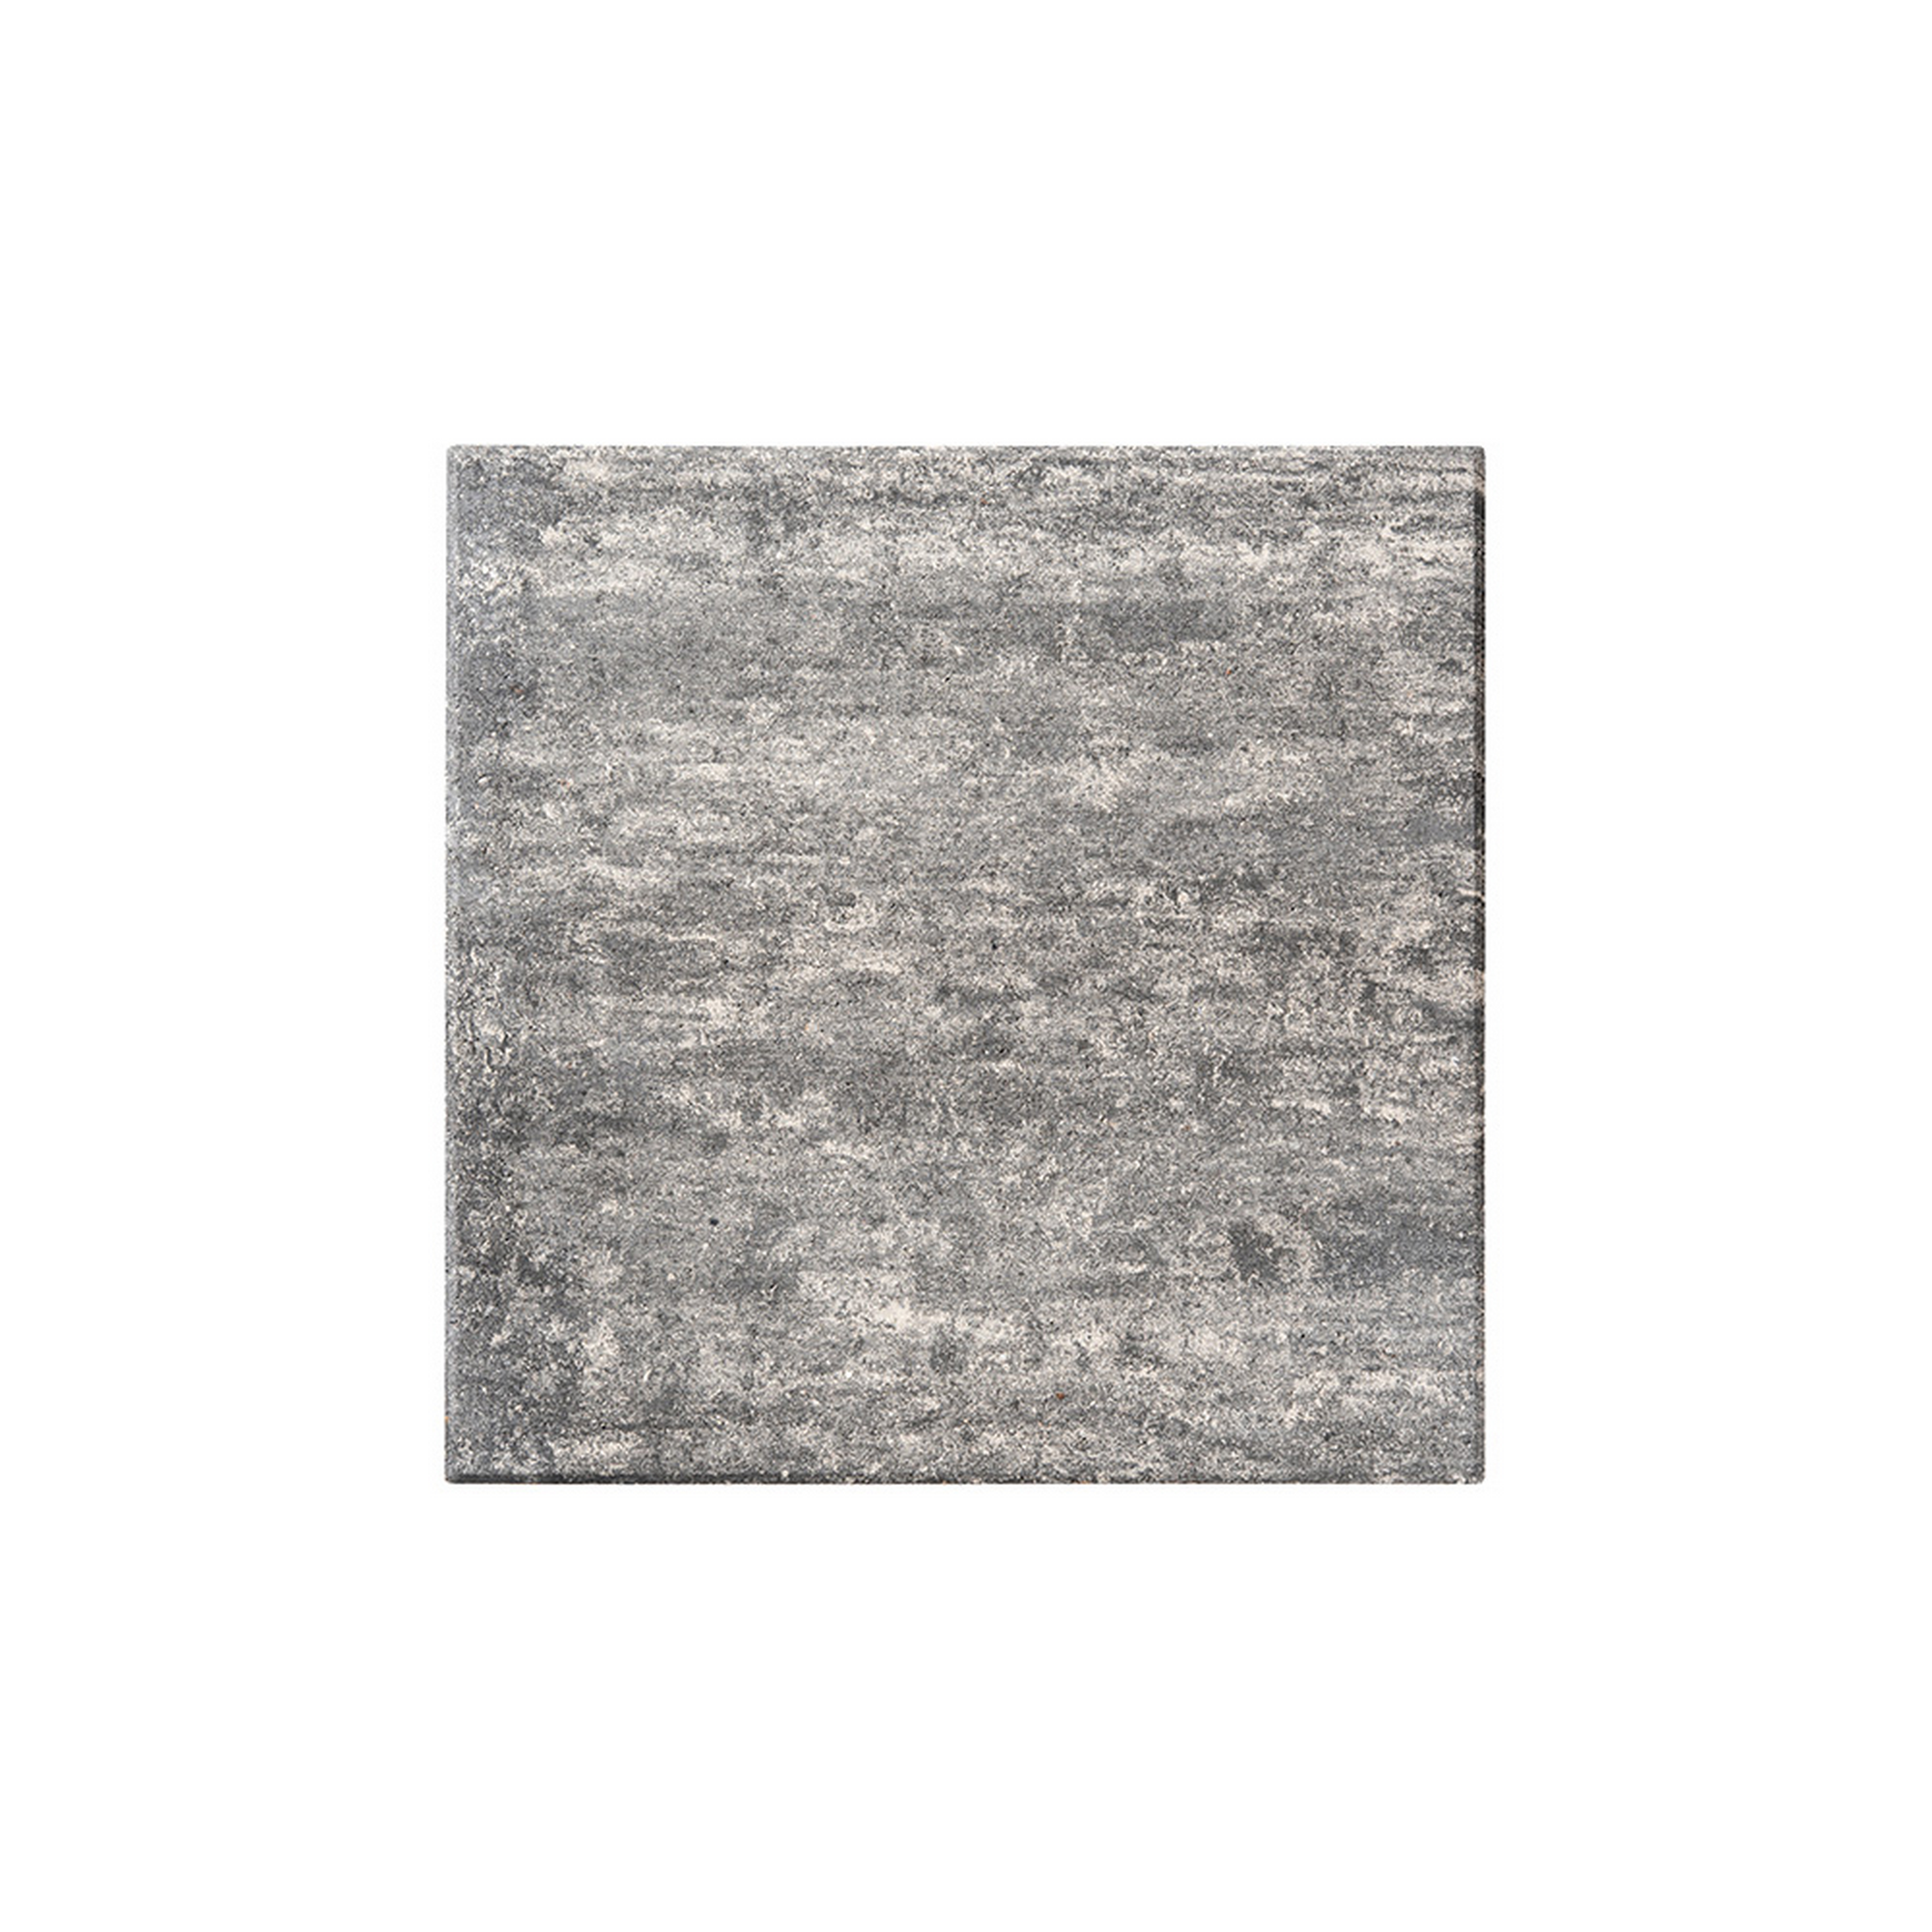 Terrassenplatte 'T-Court Live' Beton grau/schwarz 40 x 40 x 4 cm + product picture